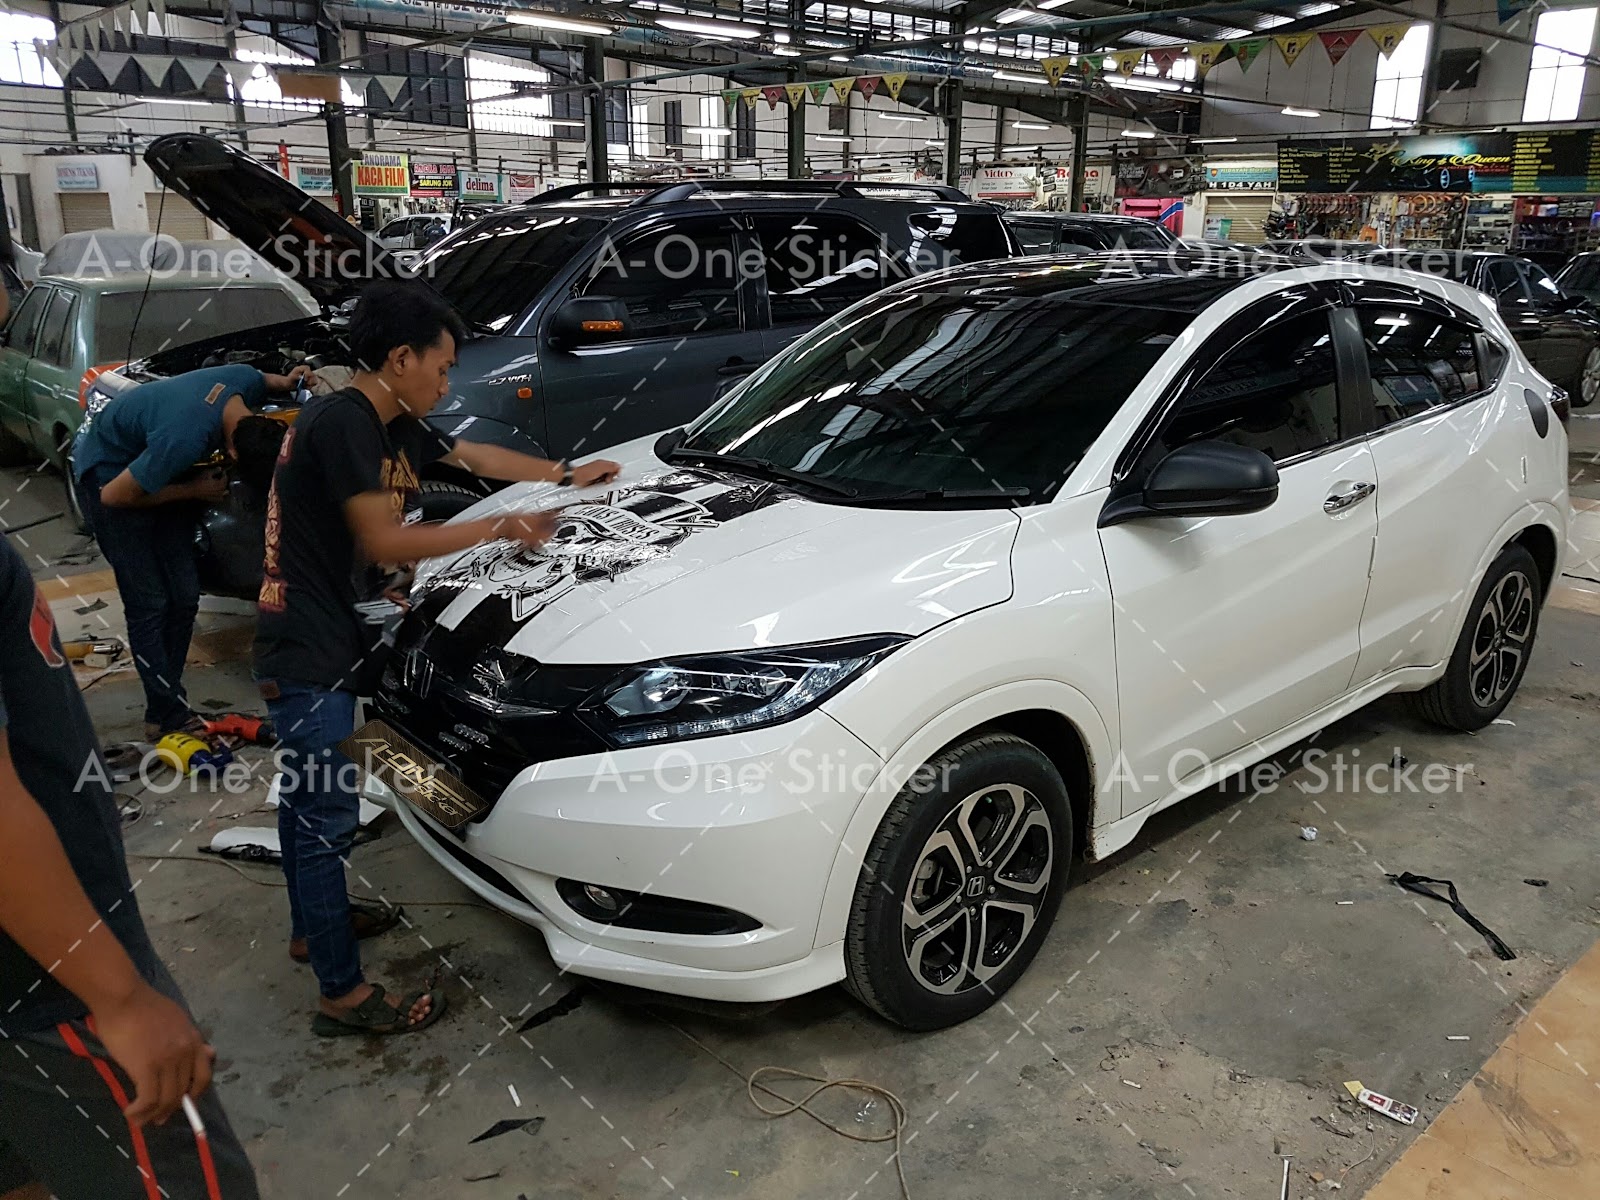 Kumpulan Cutting Sticker Mobil Jakarta Terlengkap Rekanotomotif